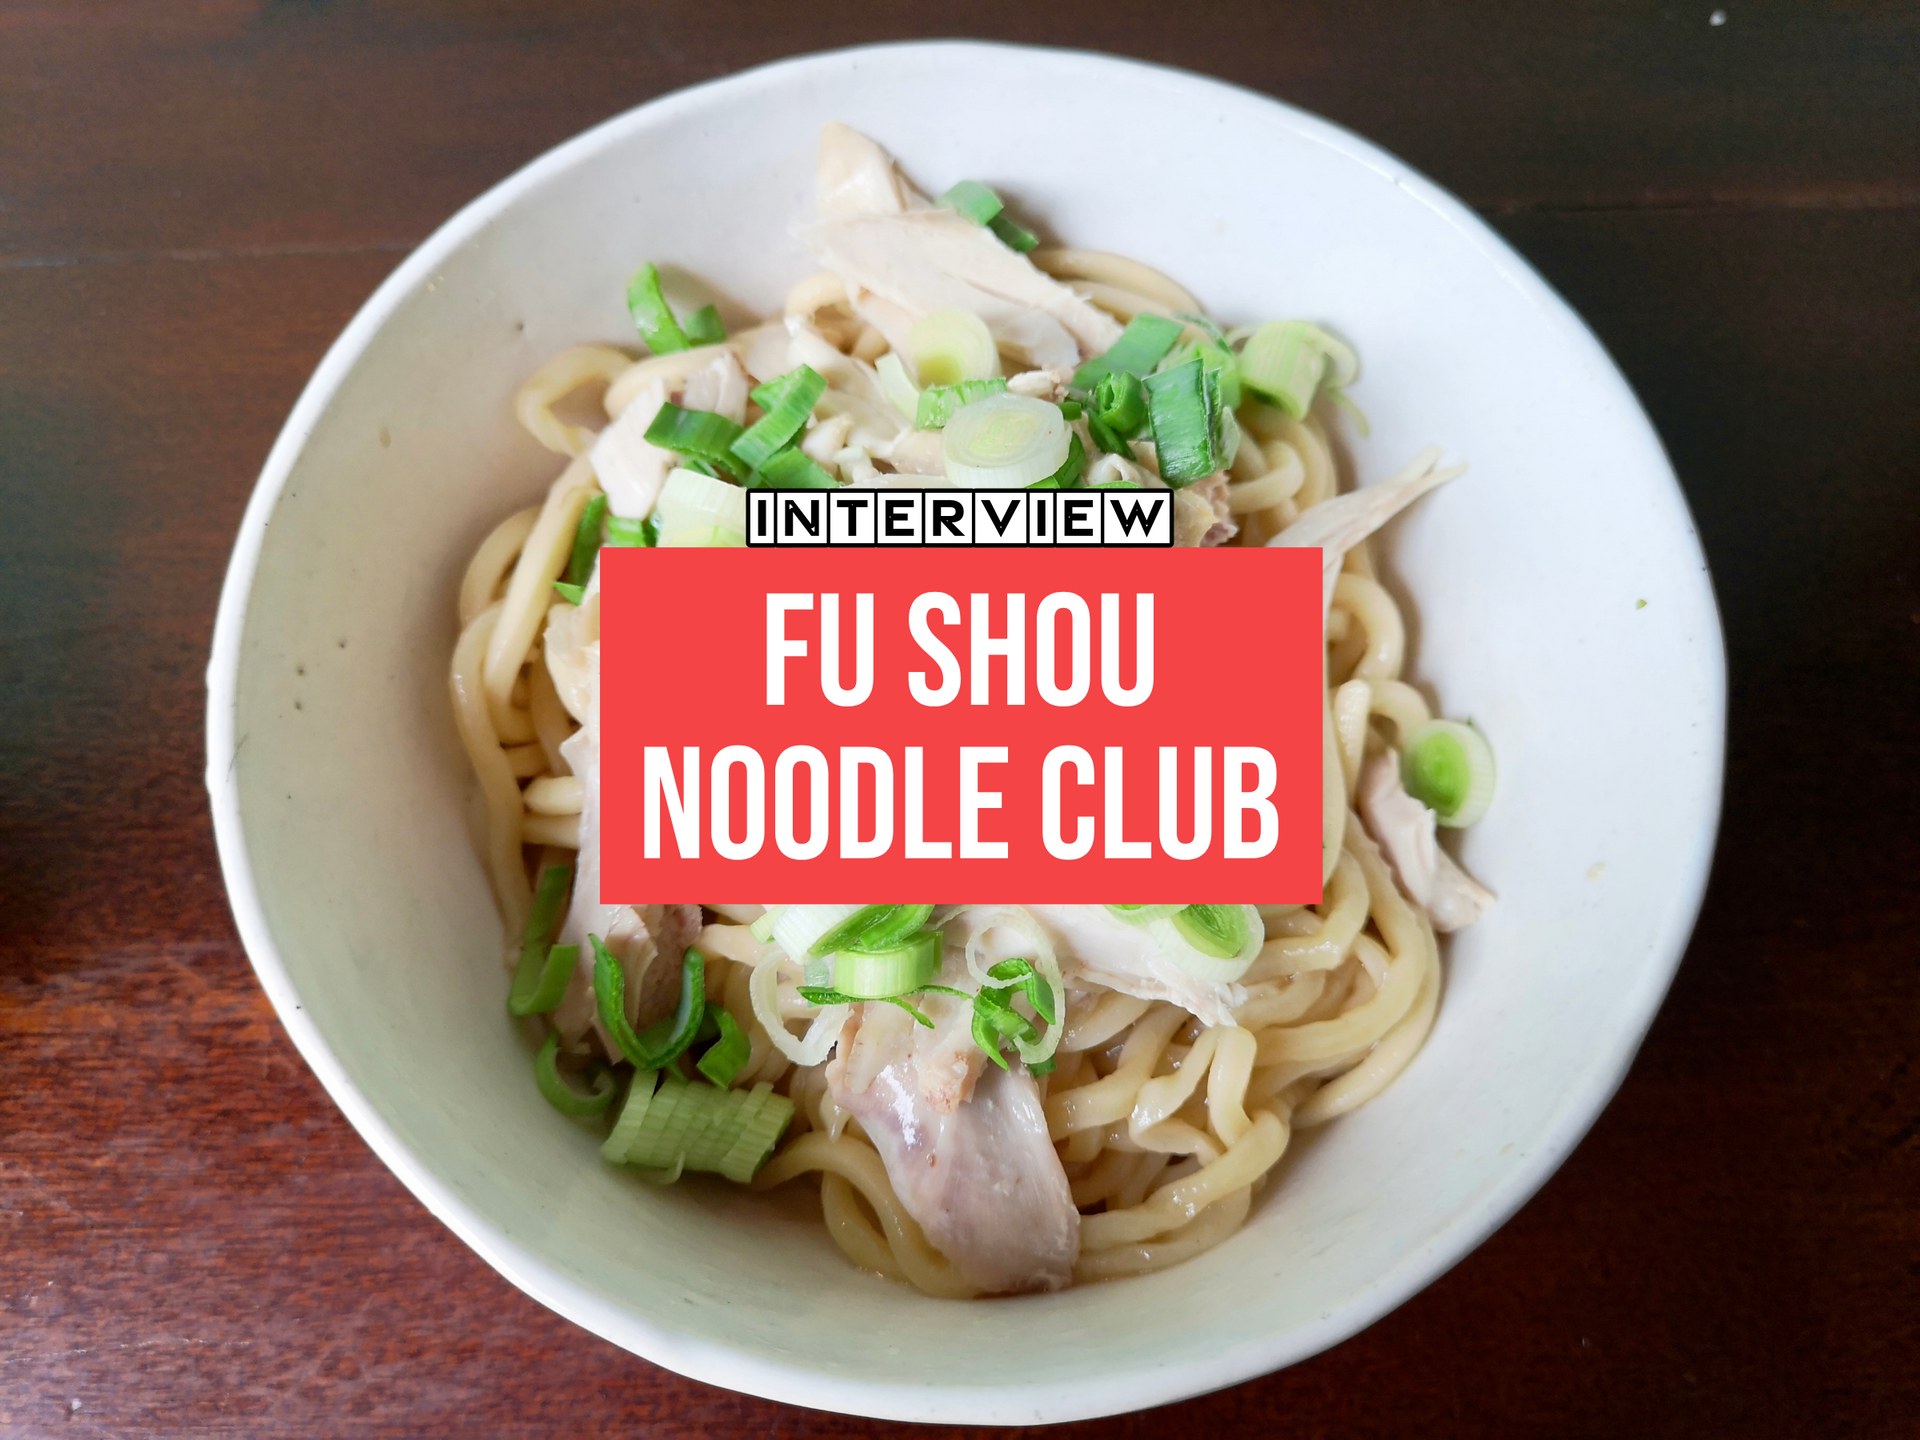 Fu shou noodle club